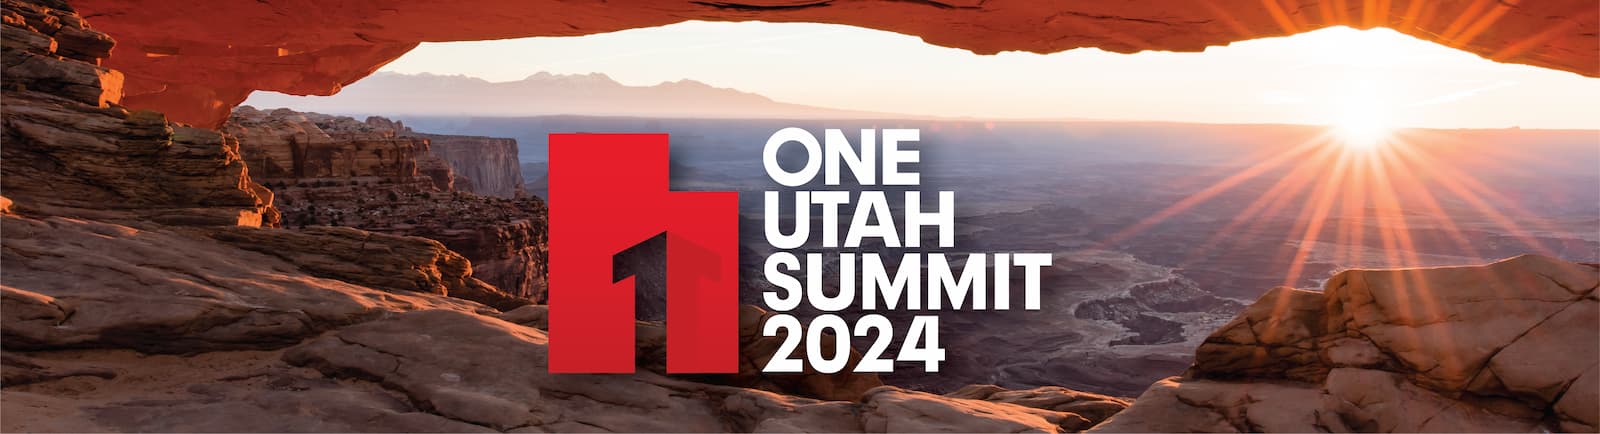 One Utah Summit among Utah arches